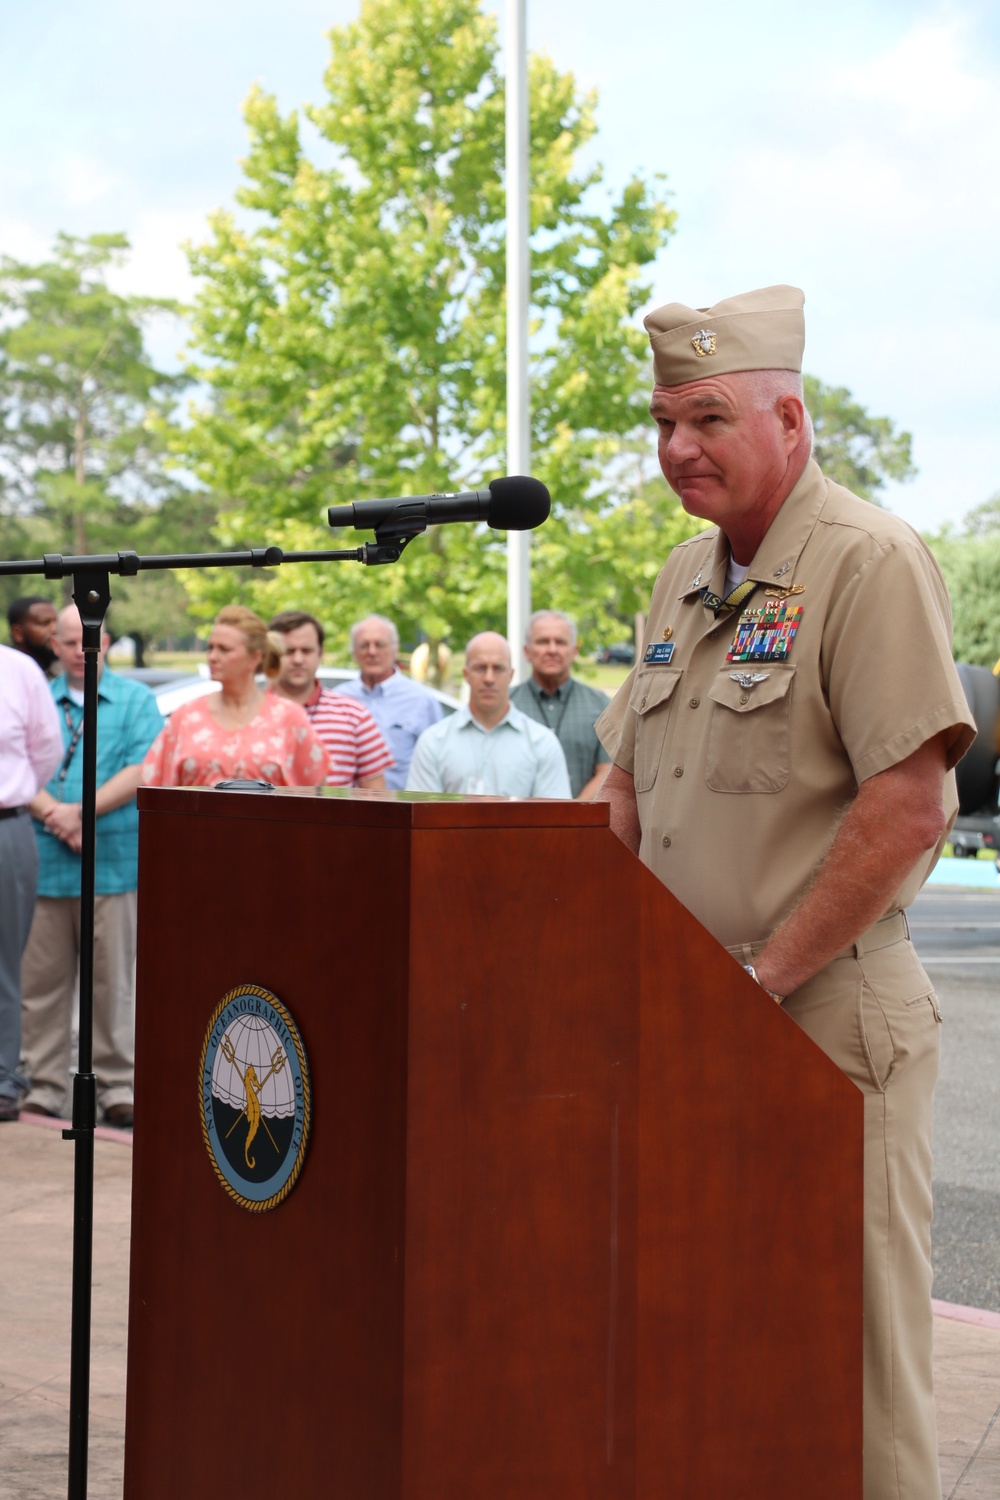 NAVOCEANO Commemorates Midway 75th Anniversary at Sea, Ashore